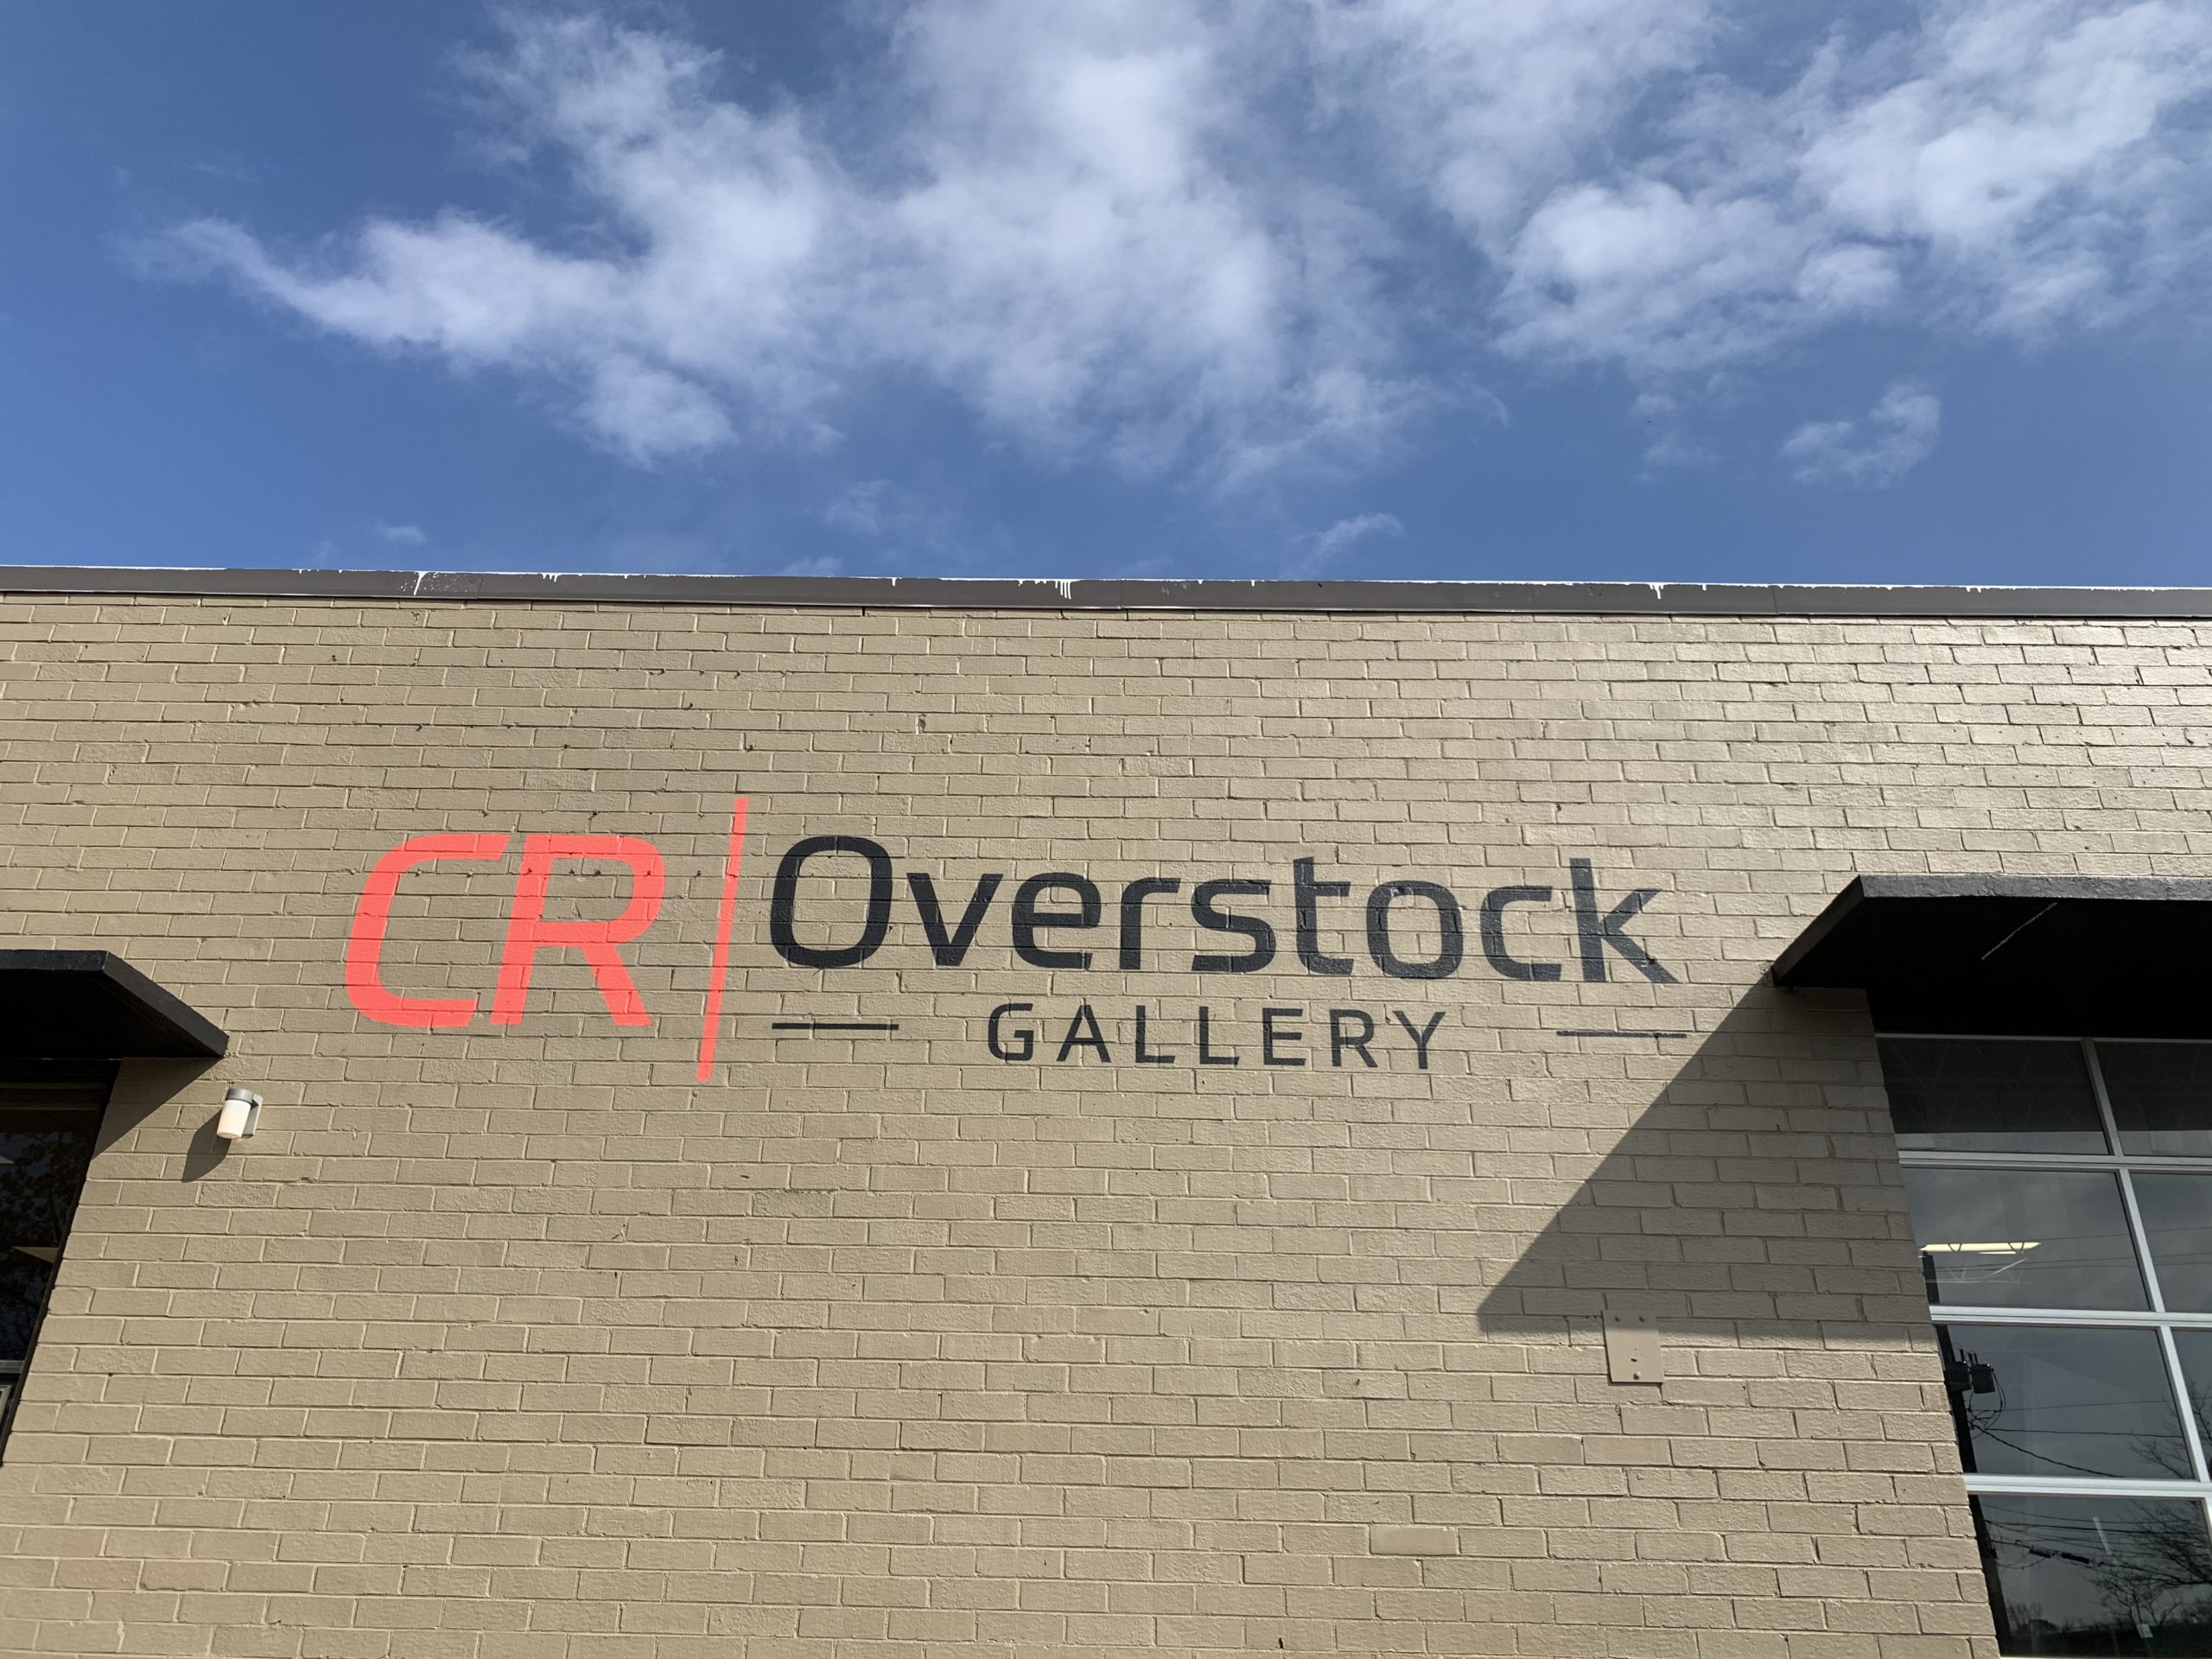 cr overstock gallery